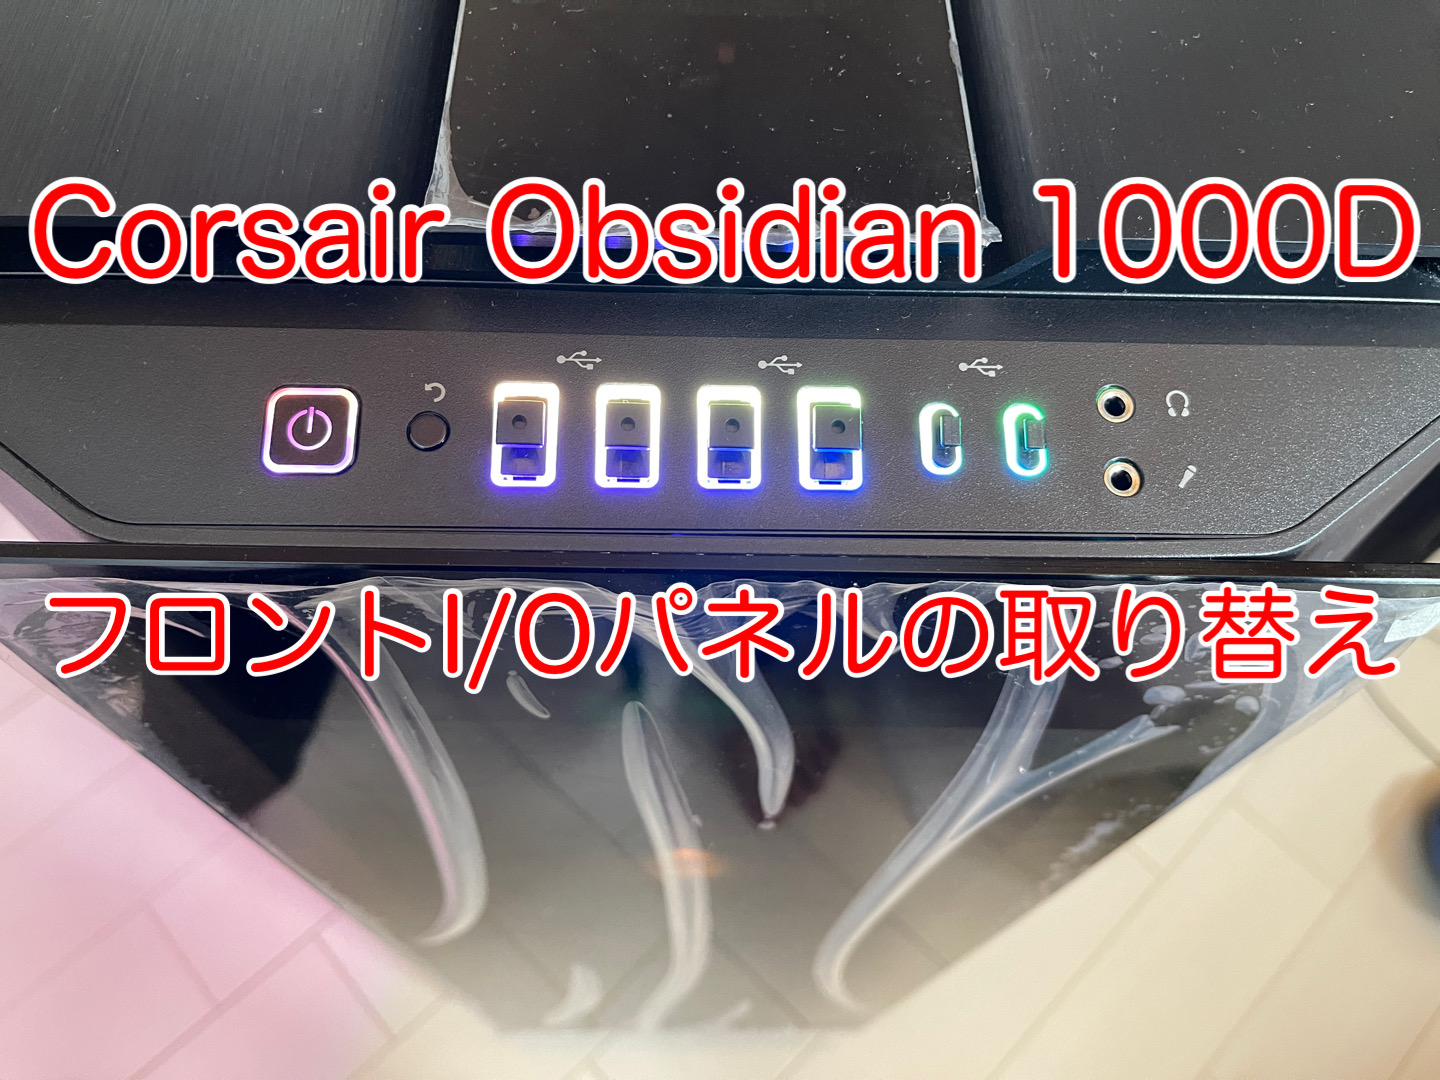 Corsair PCケース Obsidian 1000D分解】フロントI/Oパネルの取り替え方